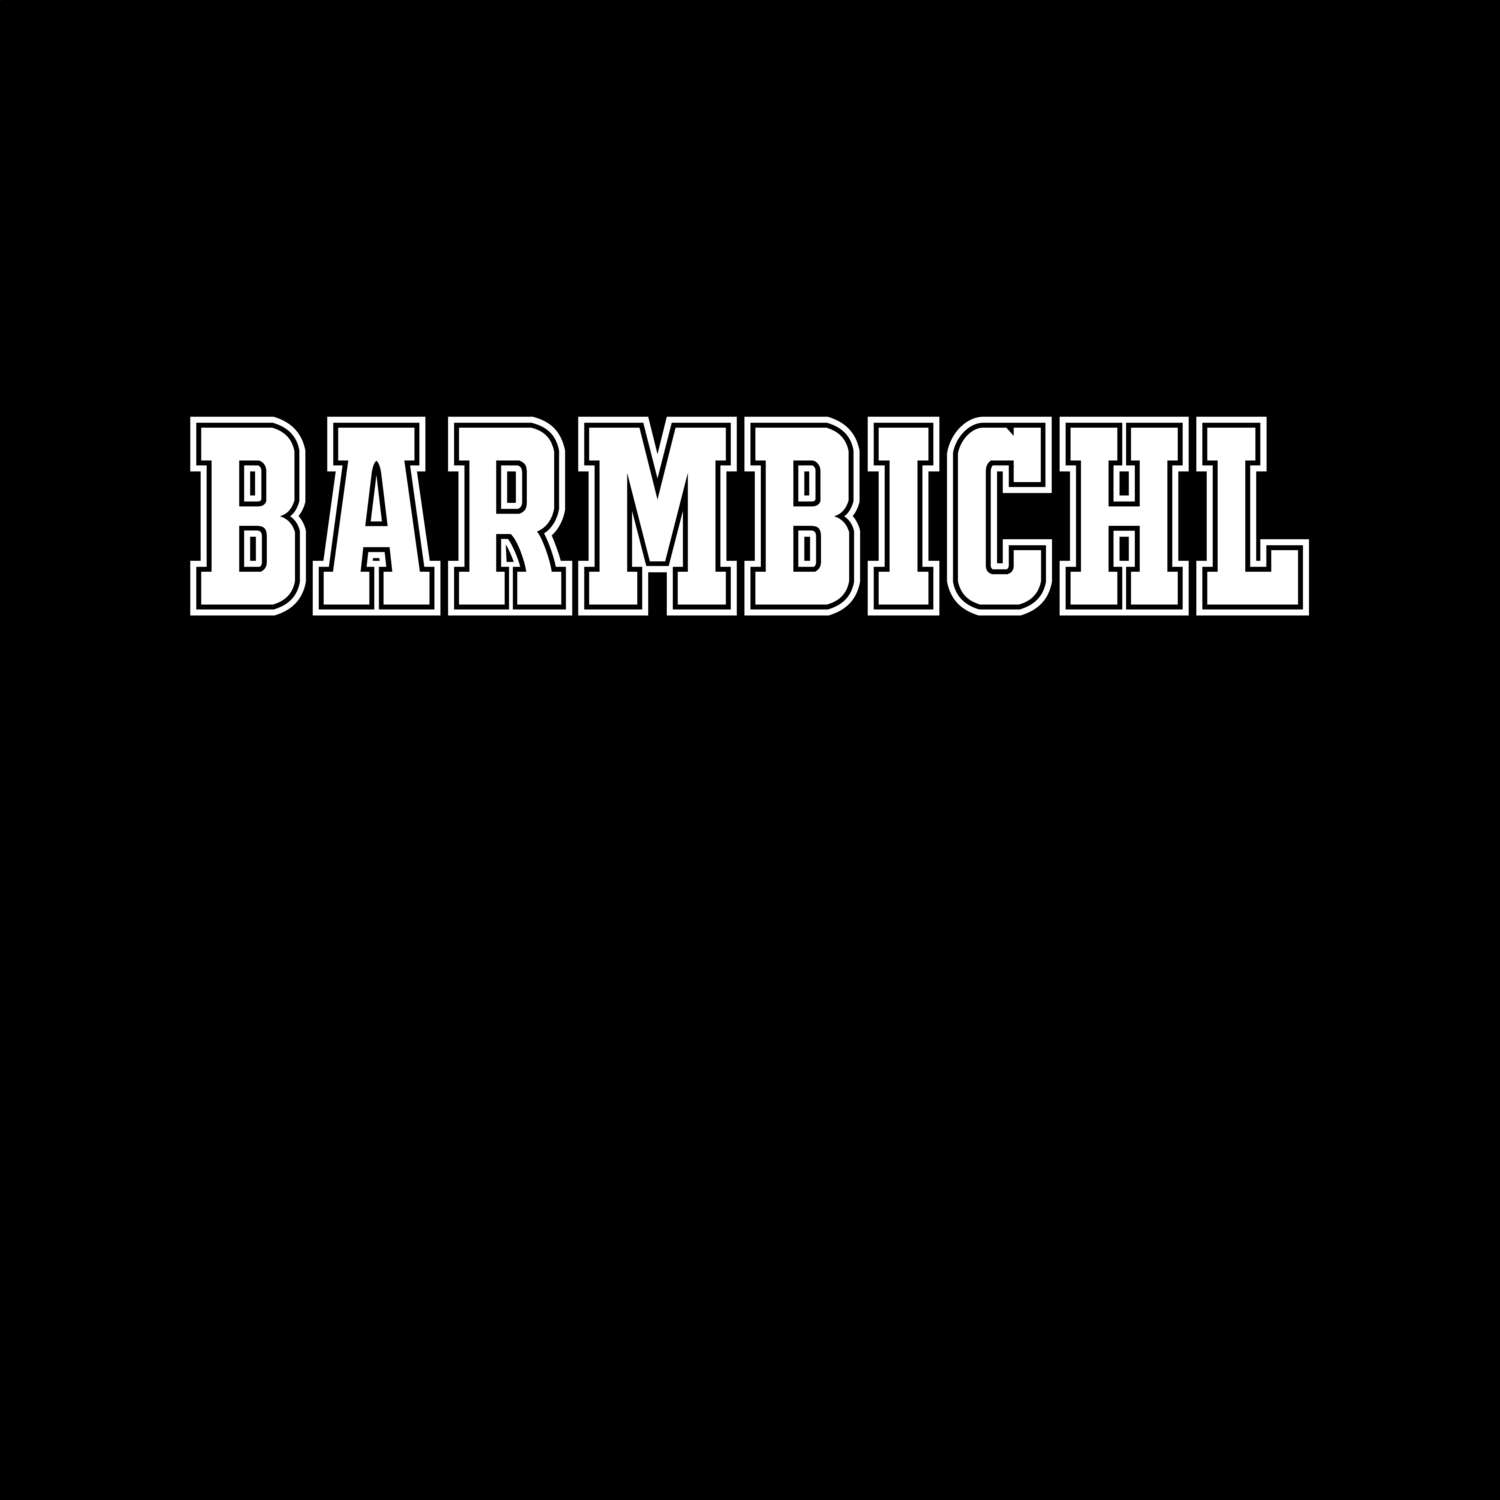 Barmbichl T-Shirt »Classic«